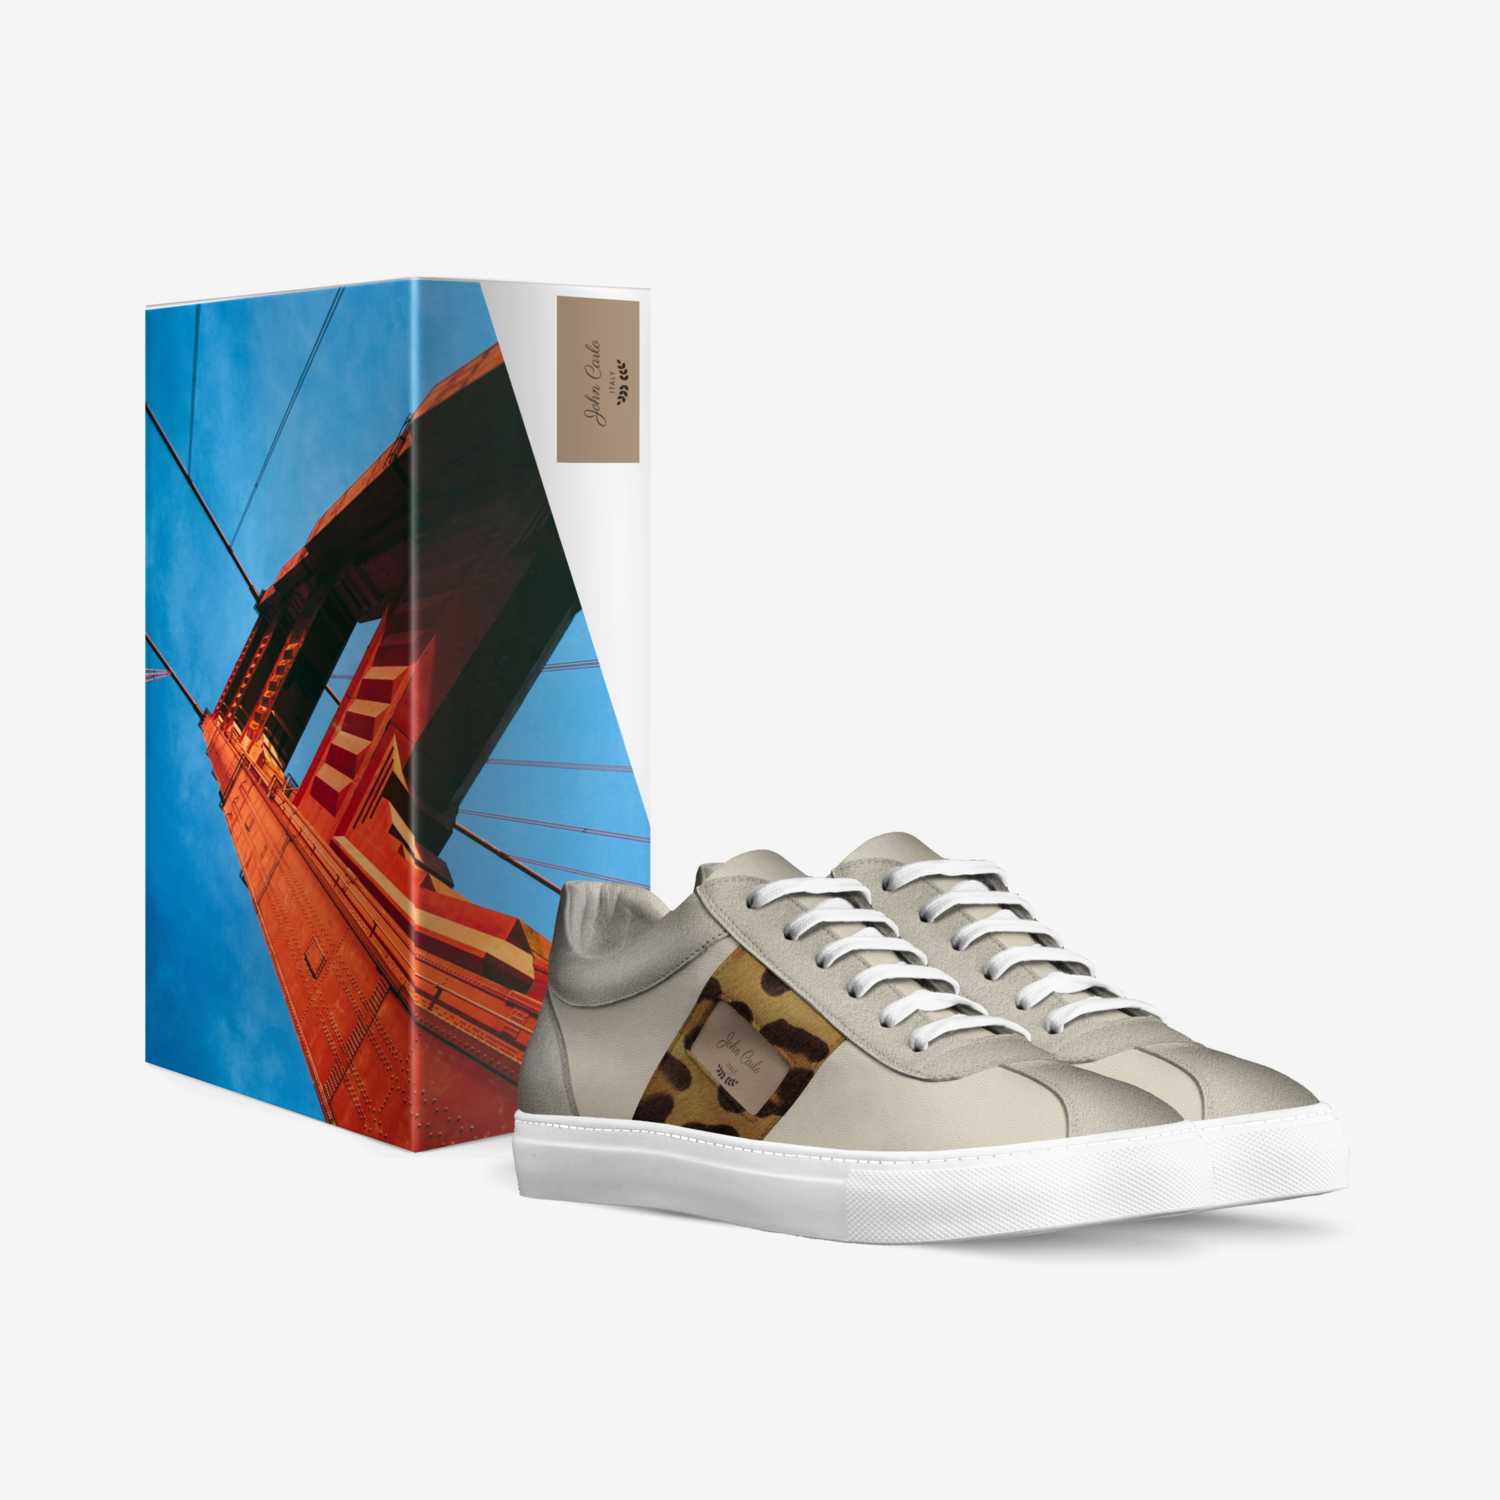 John Carlo custom made in Italy shoes by John Cicornio | Box view